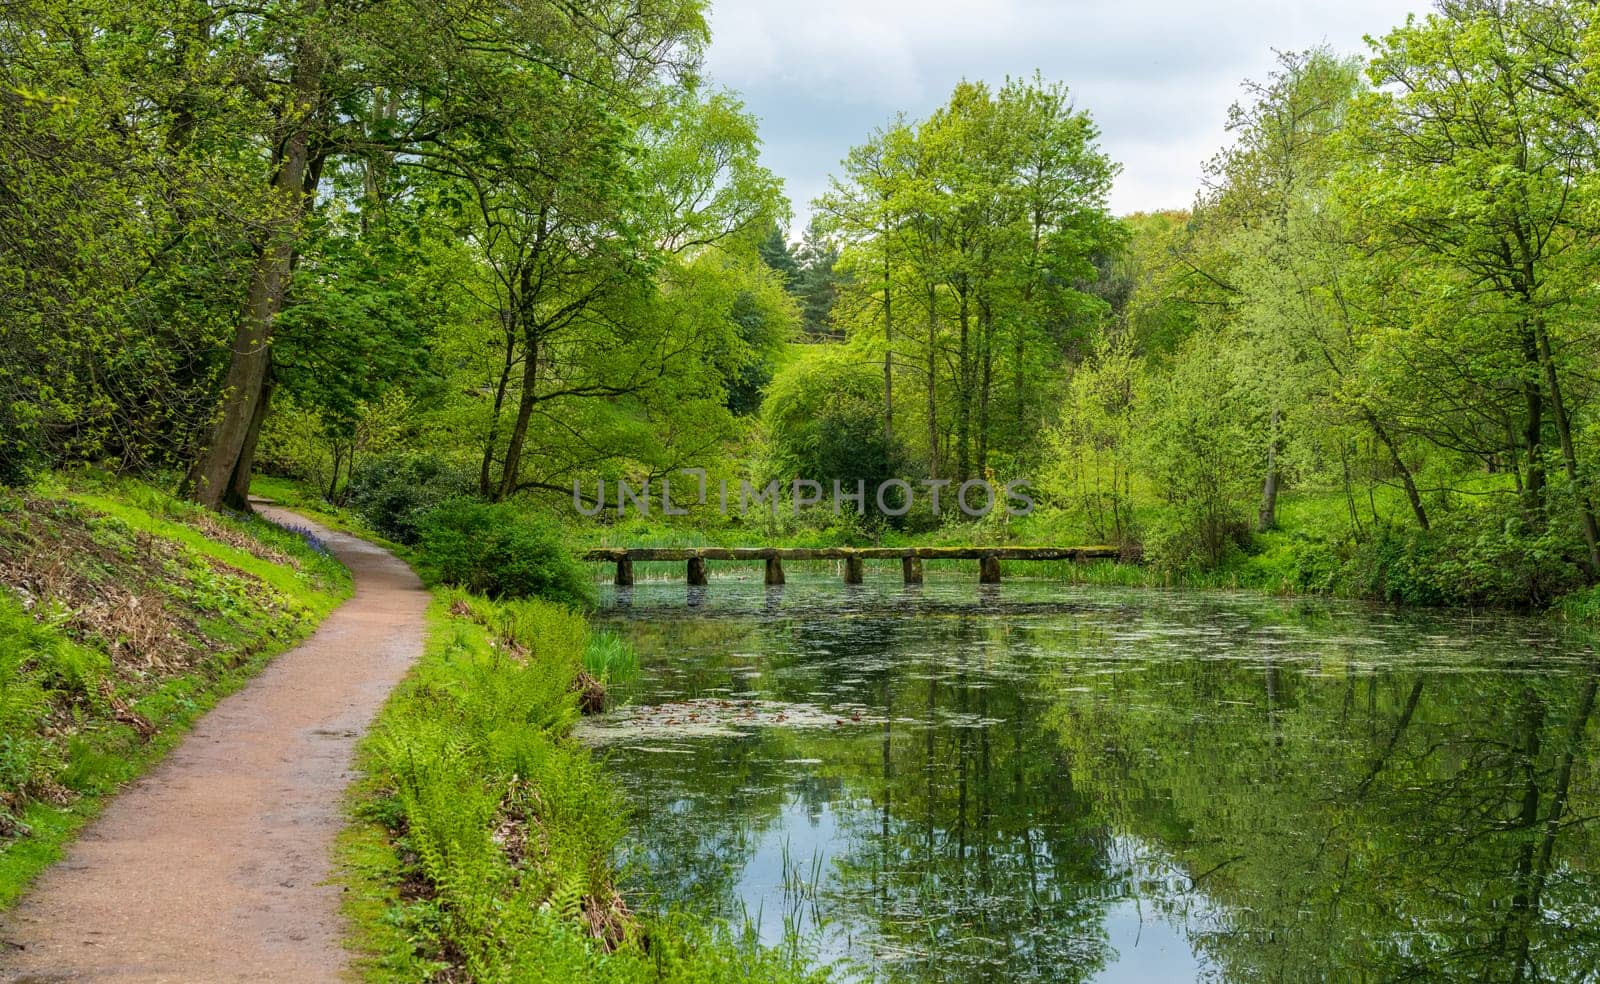 Stone slab bridge across calm river in English parkland by steheap